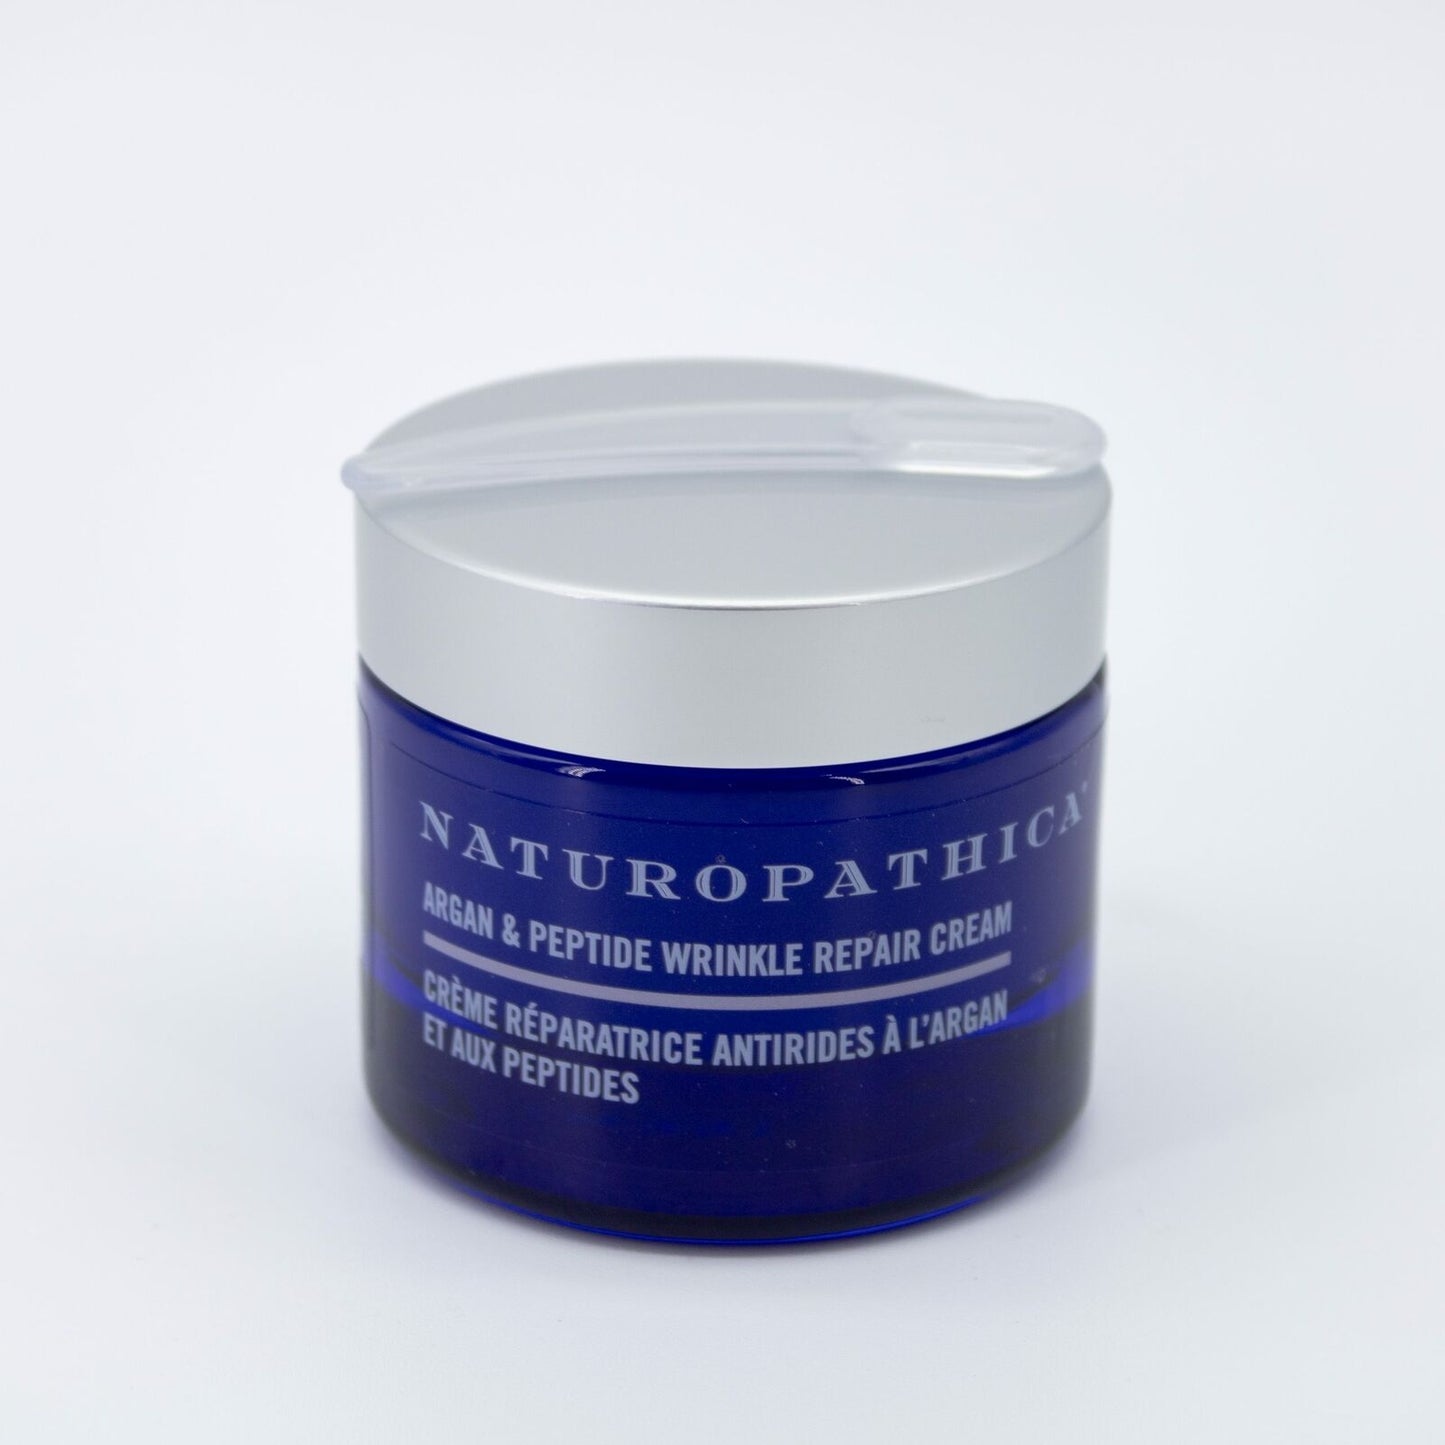 NATUROPATHICA Argan & Peptide Wrinkle Repair Cream 1.7oz - Imperfect Box